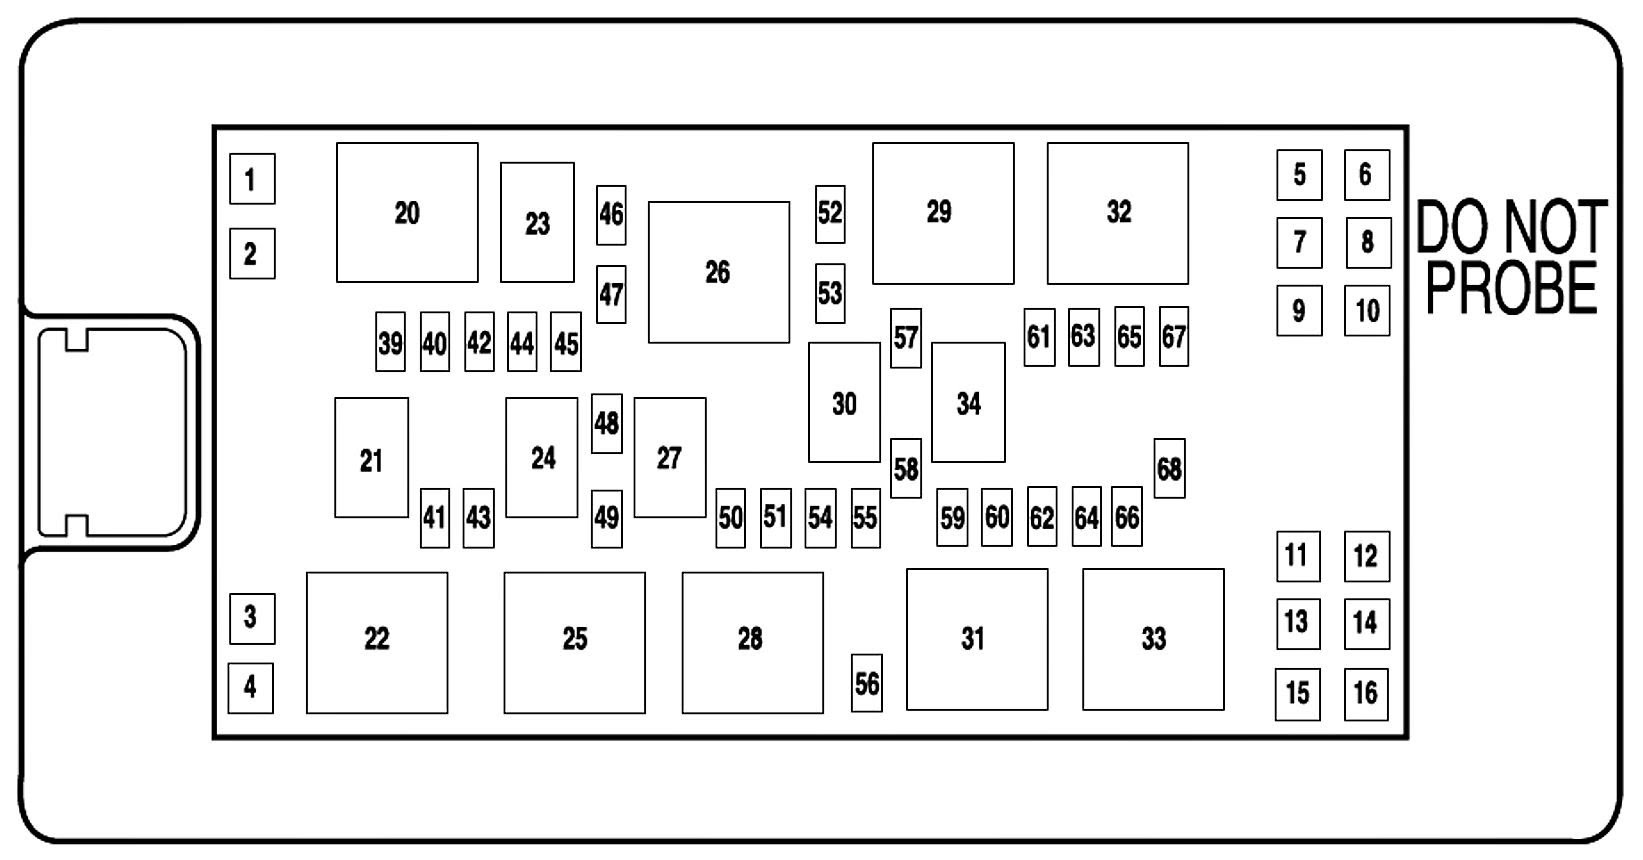 Manuals] Pontiac G6 Fuse Box Diagram.pdf FULL Version HD Quality ...